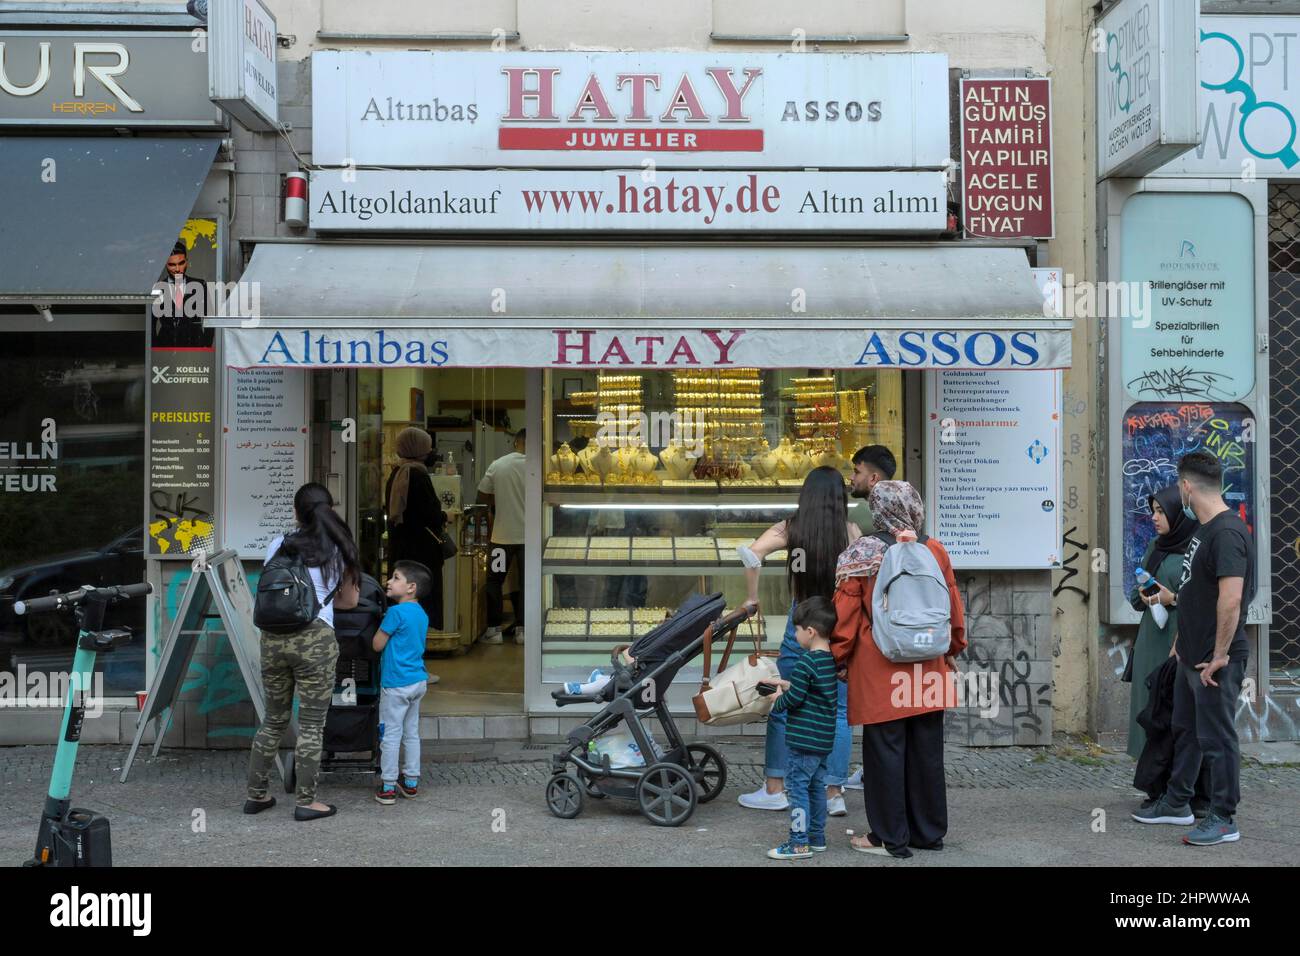 Hatay Jeweller, Kottbusserdamm, Kreuzberg, Friedrichshain-Kreuzberg, Berlin, Germany Stock Photo